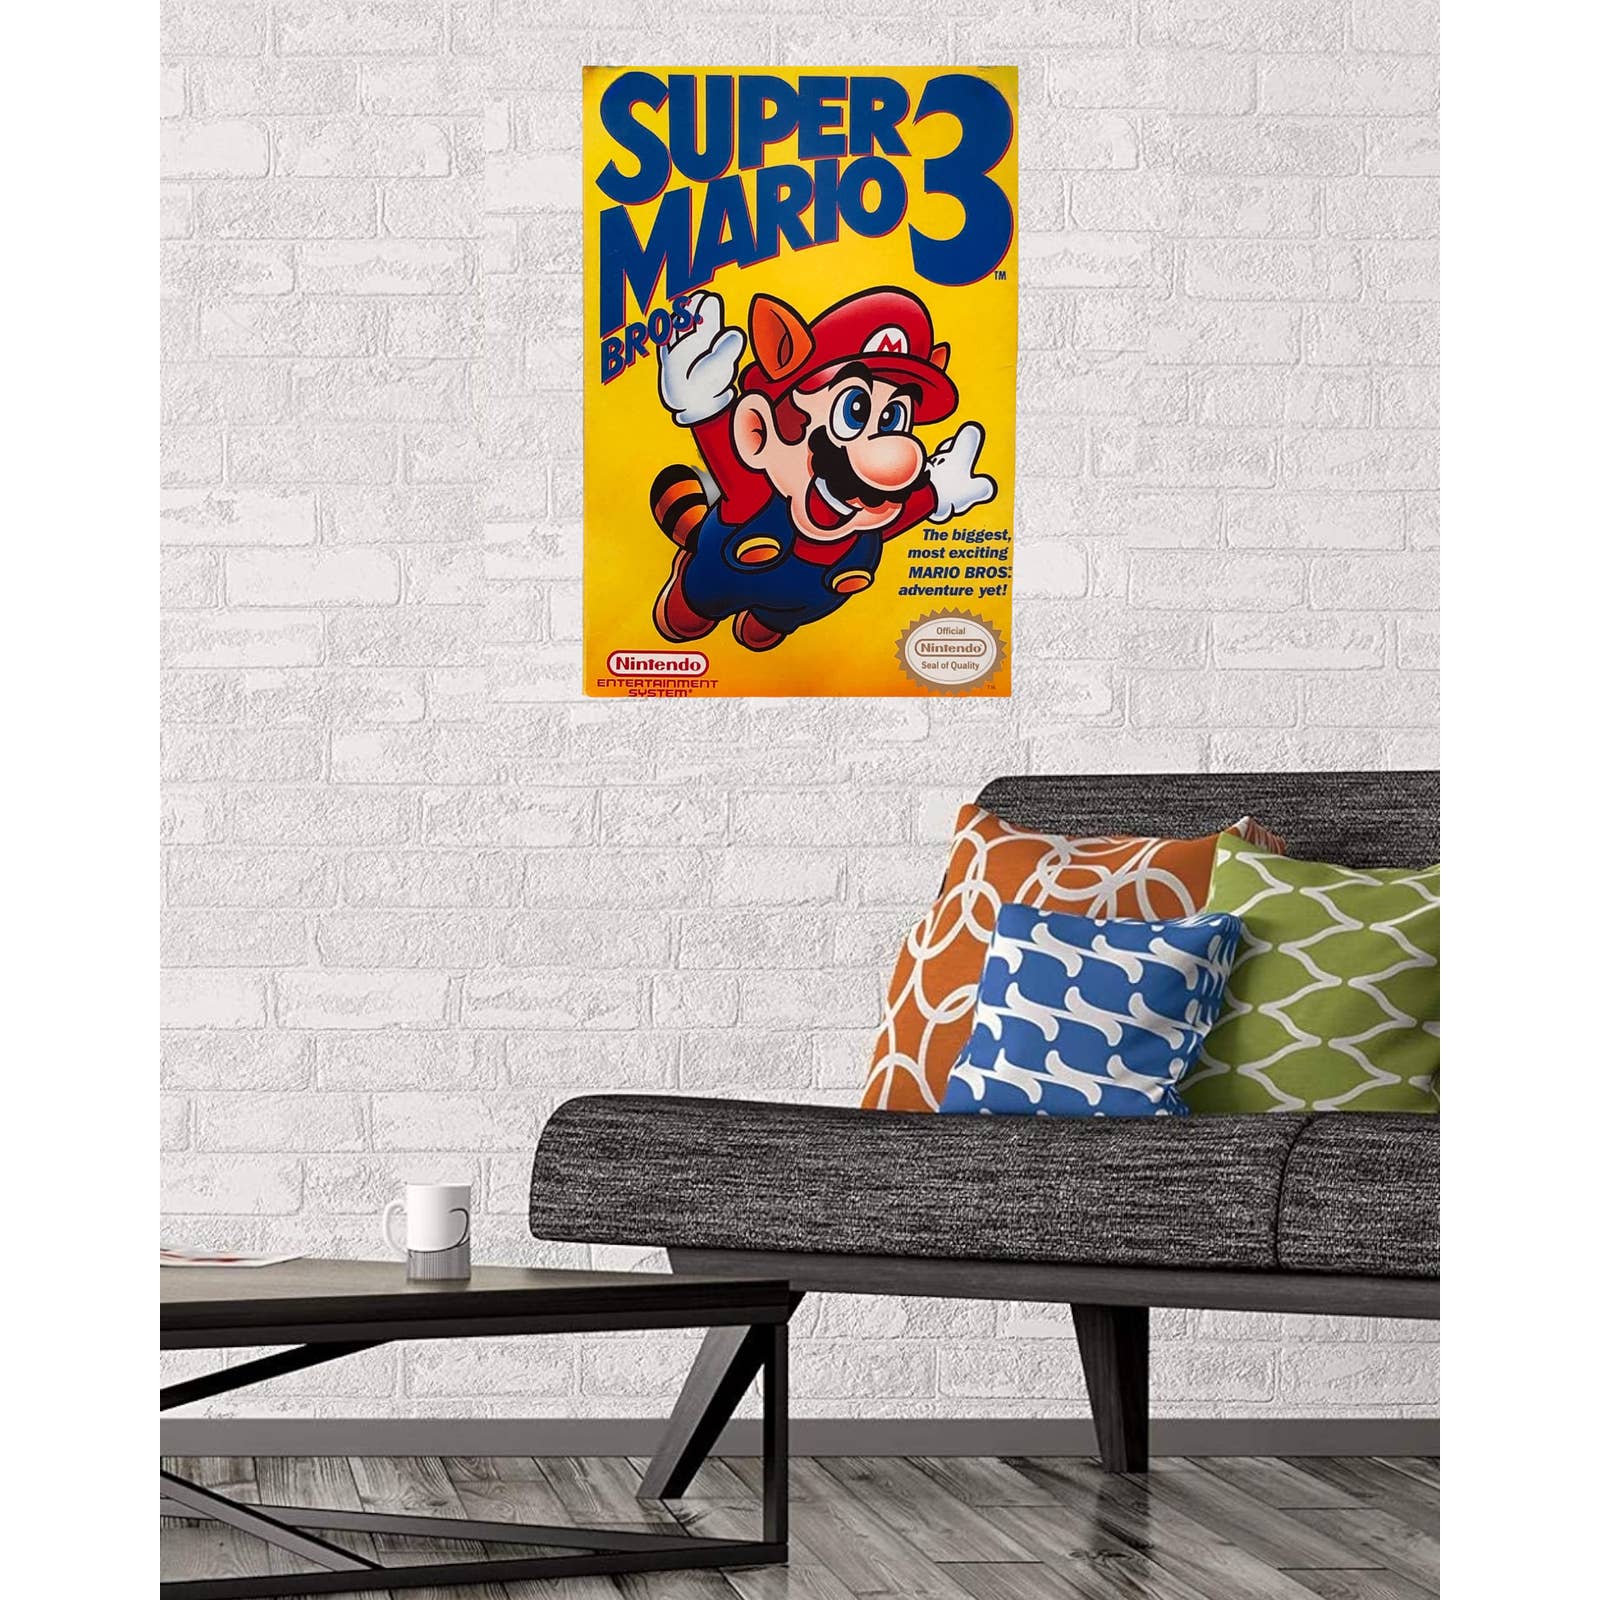 Super Mario Bros 3 Game Poster | Nintendo | NES | NEW | USA